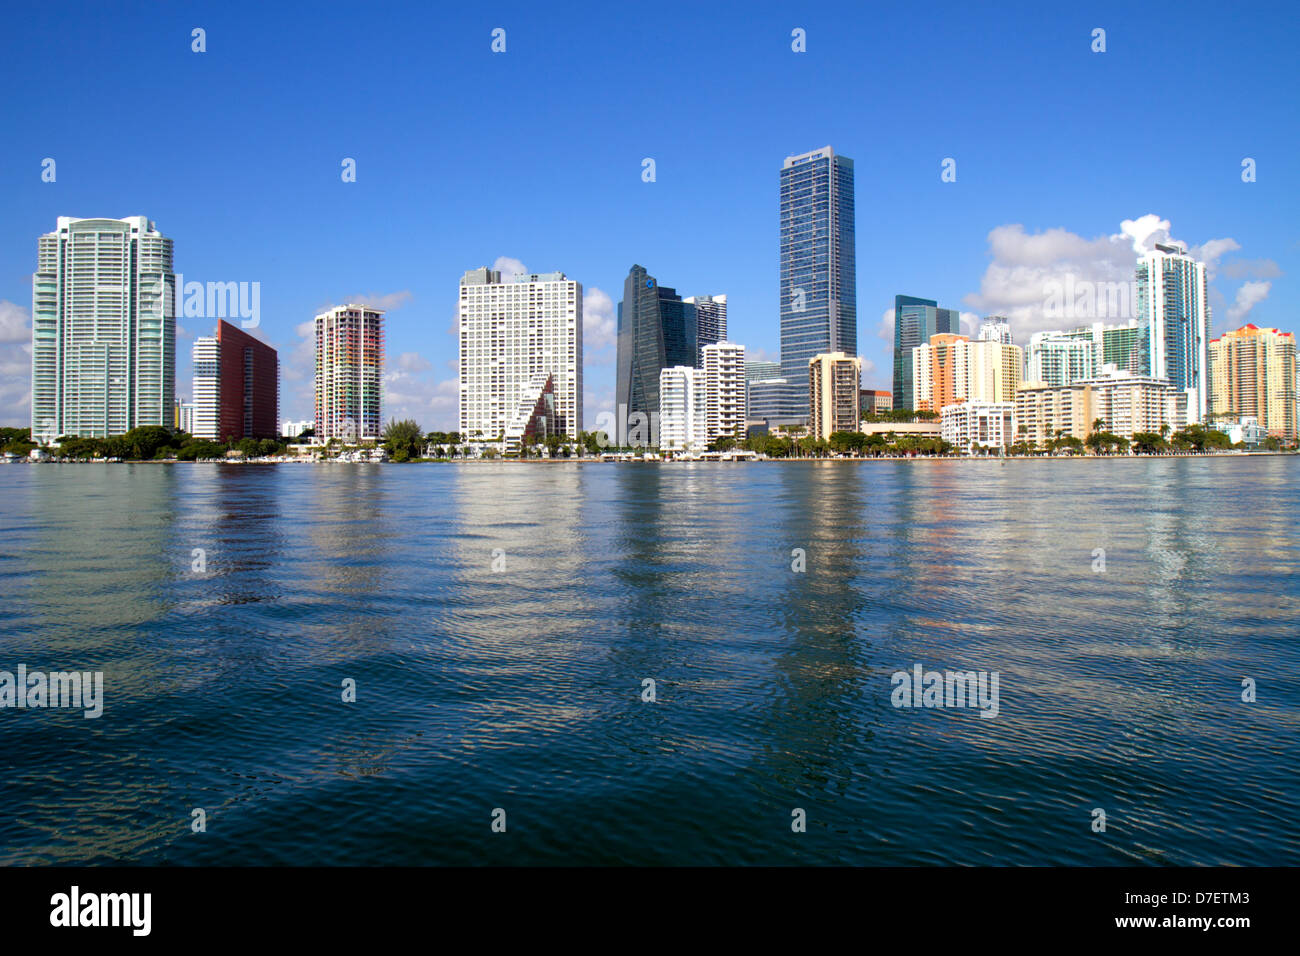 Miami Florida,Biscayne Bay,city skyline,Brickell Avenue,water,skyscrapers,high rise skyscraper skyscrapers building buildings condominium residential Stock Photo